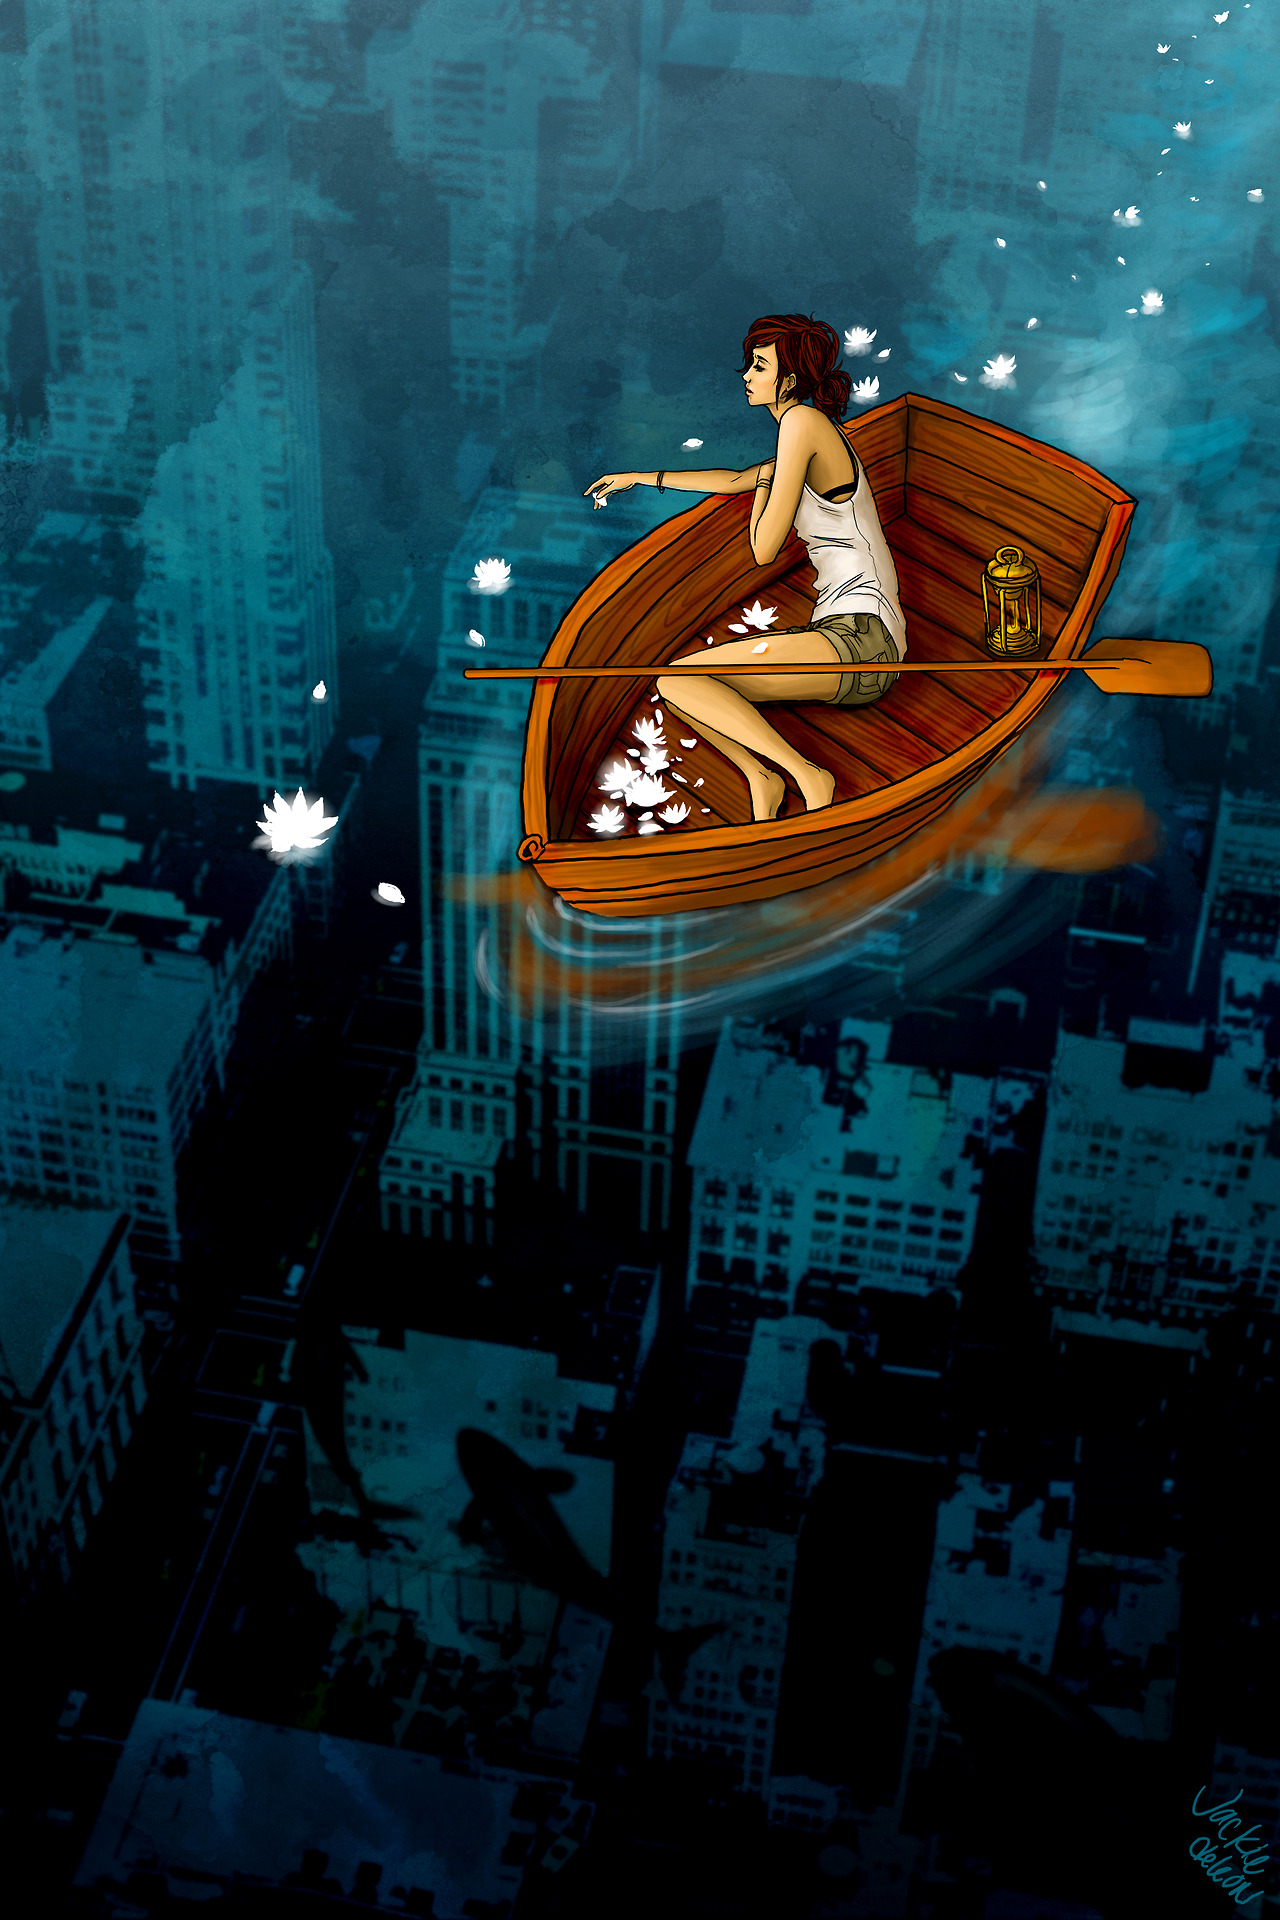 Фото Девушка в лодке с лотосами парит над городом, ву Jackie de Leon